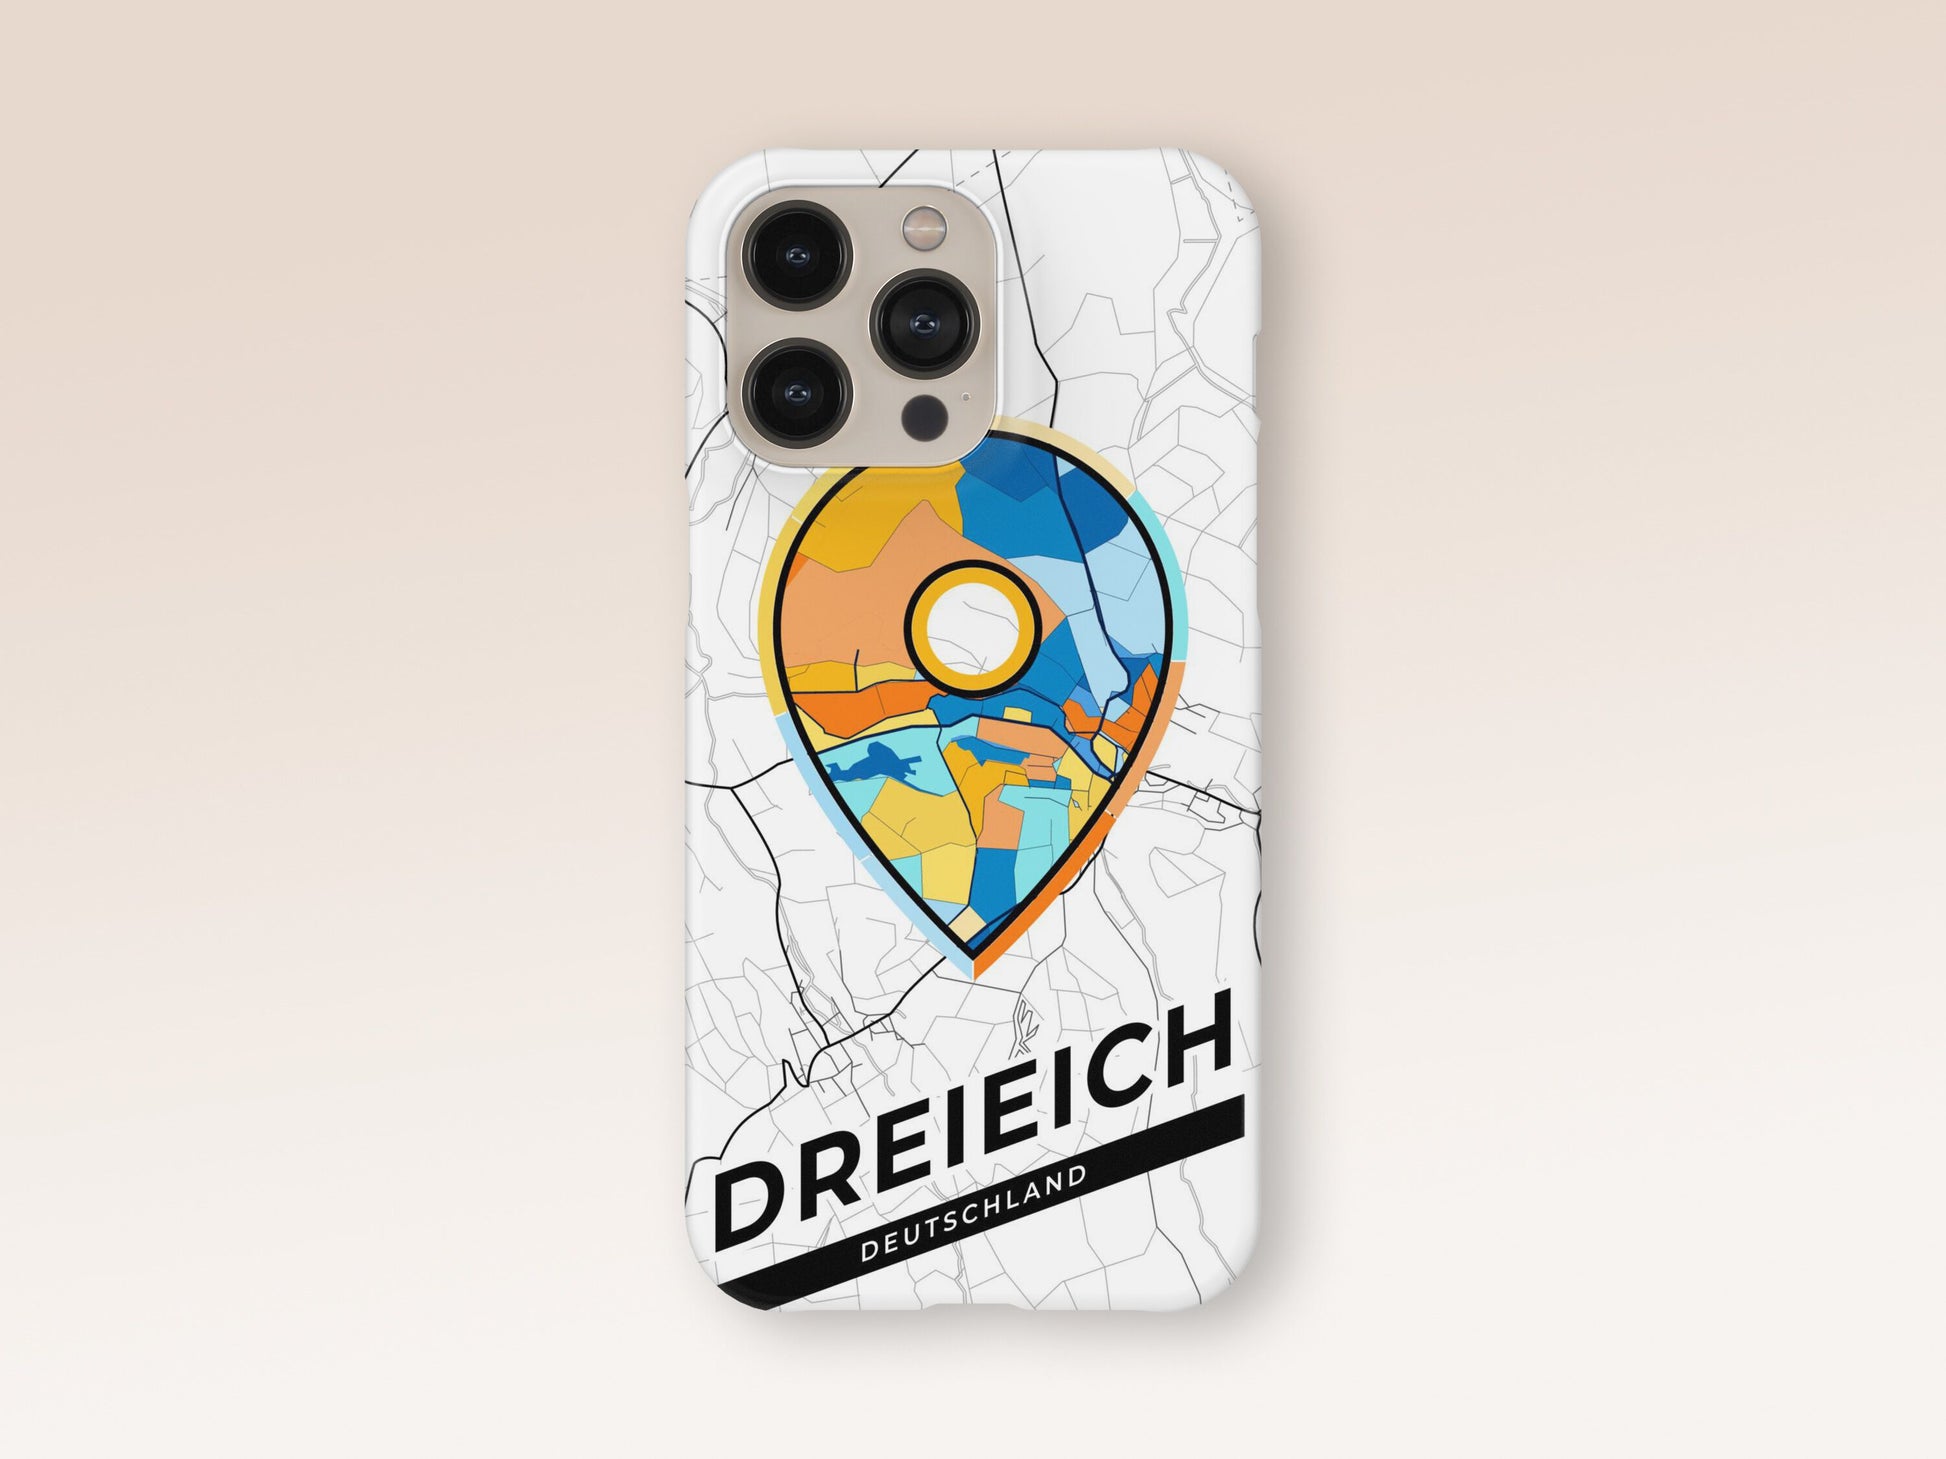 Dreieich Deutschland slim phone case with colorful icon. Birthday, wedding or housewarming gift. Couple match cases. 1